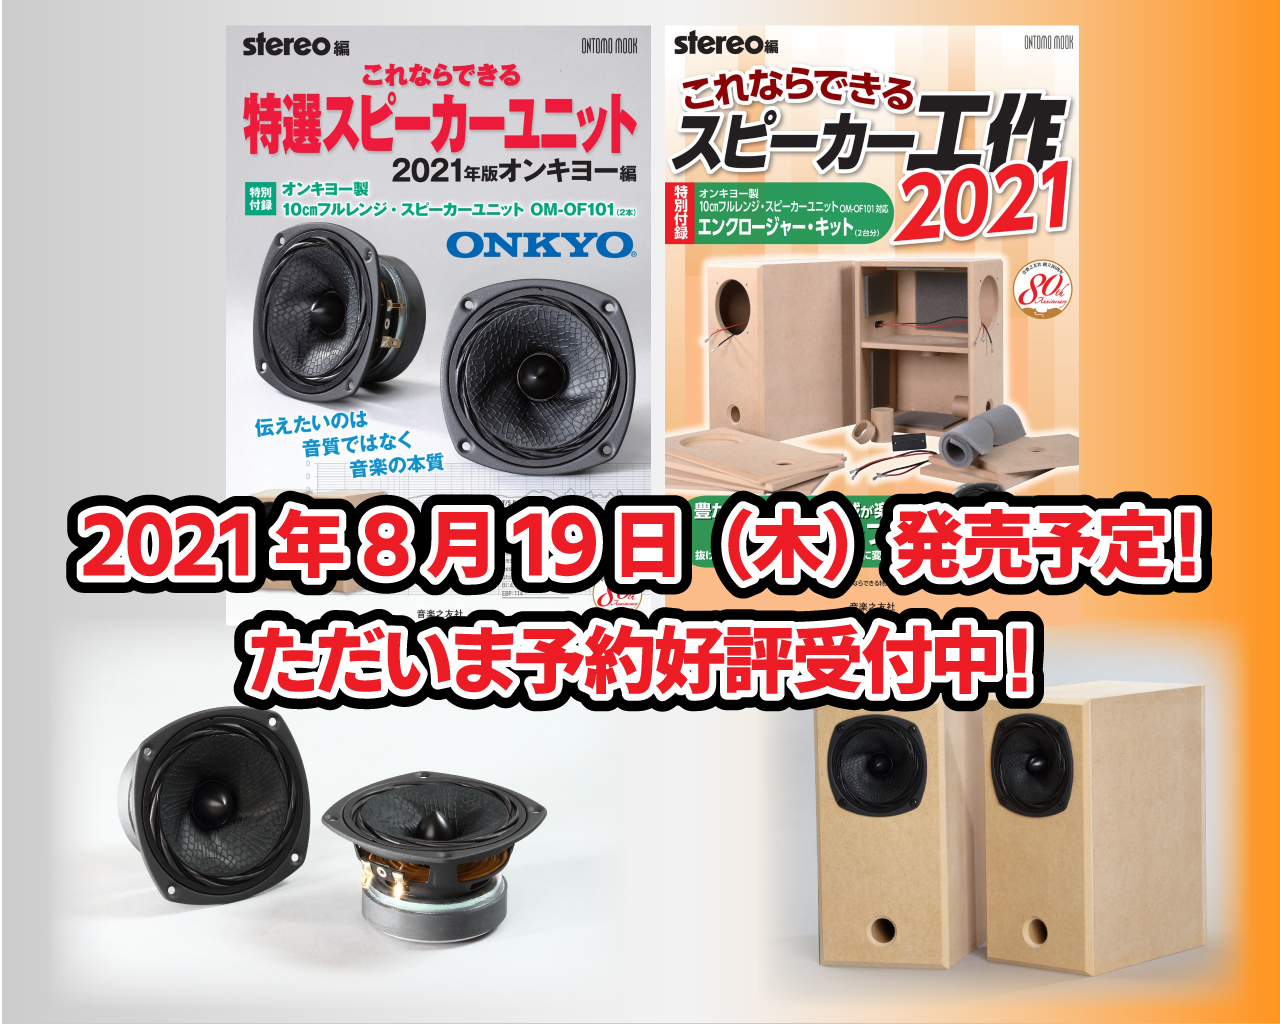 ONTOMO MOOK「これならできる」シリーズ2021年版、予約開始！ | stereo 